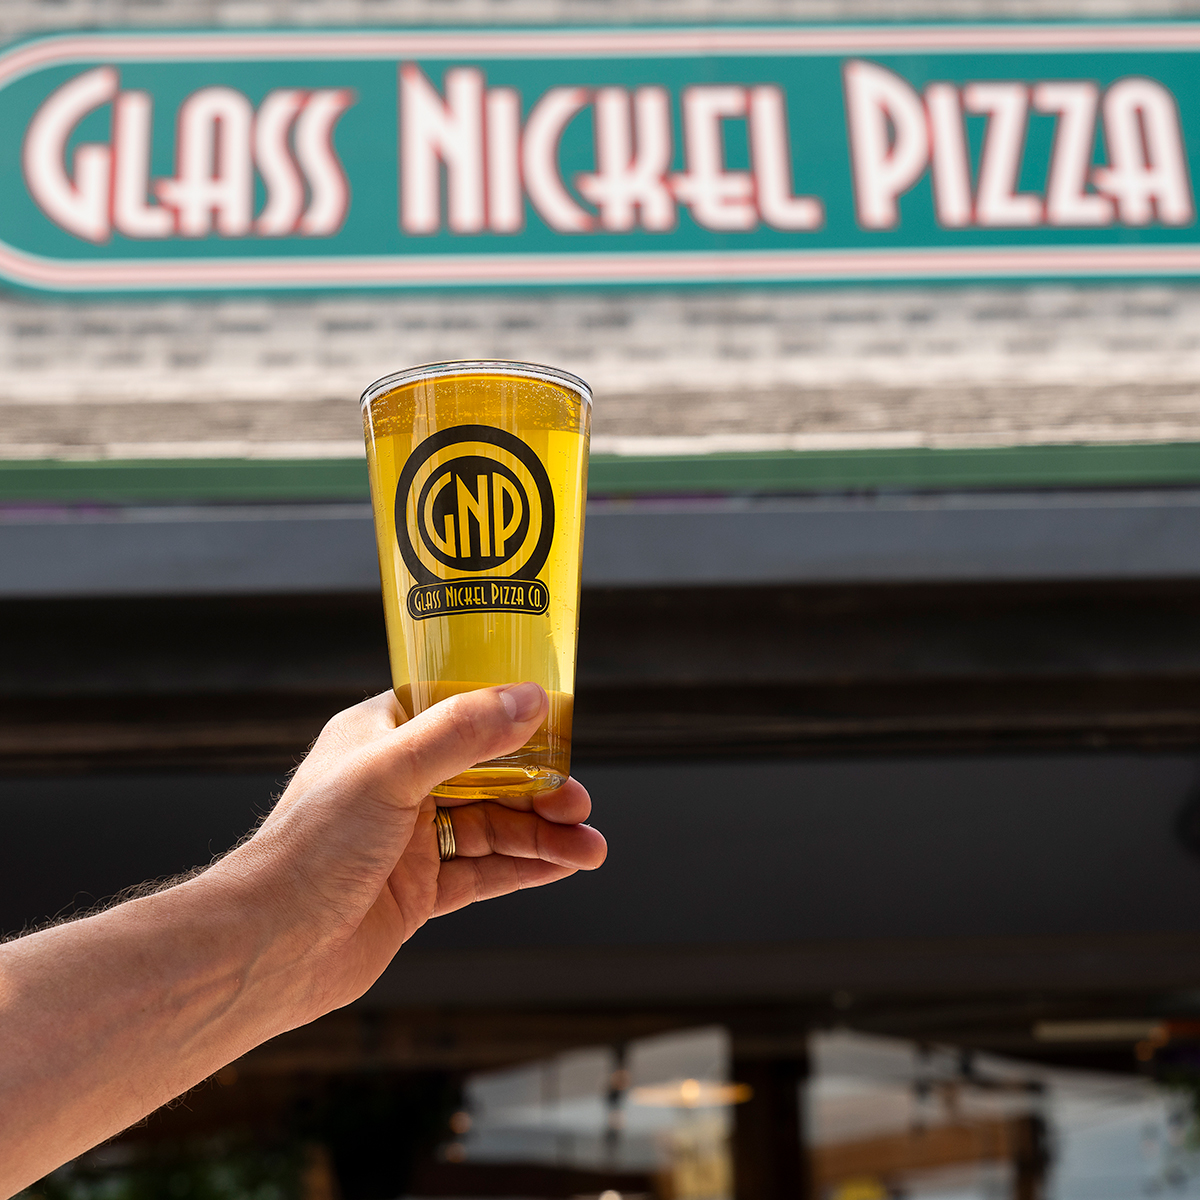 Glass Nickel Pizza Co. Appleton Photo